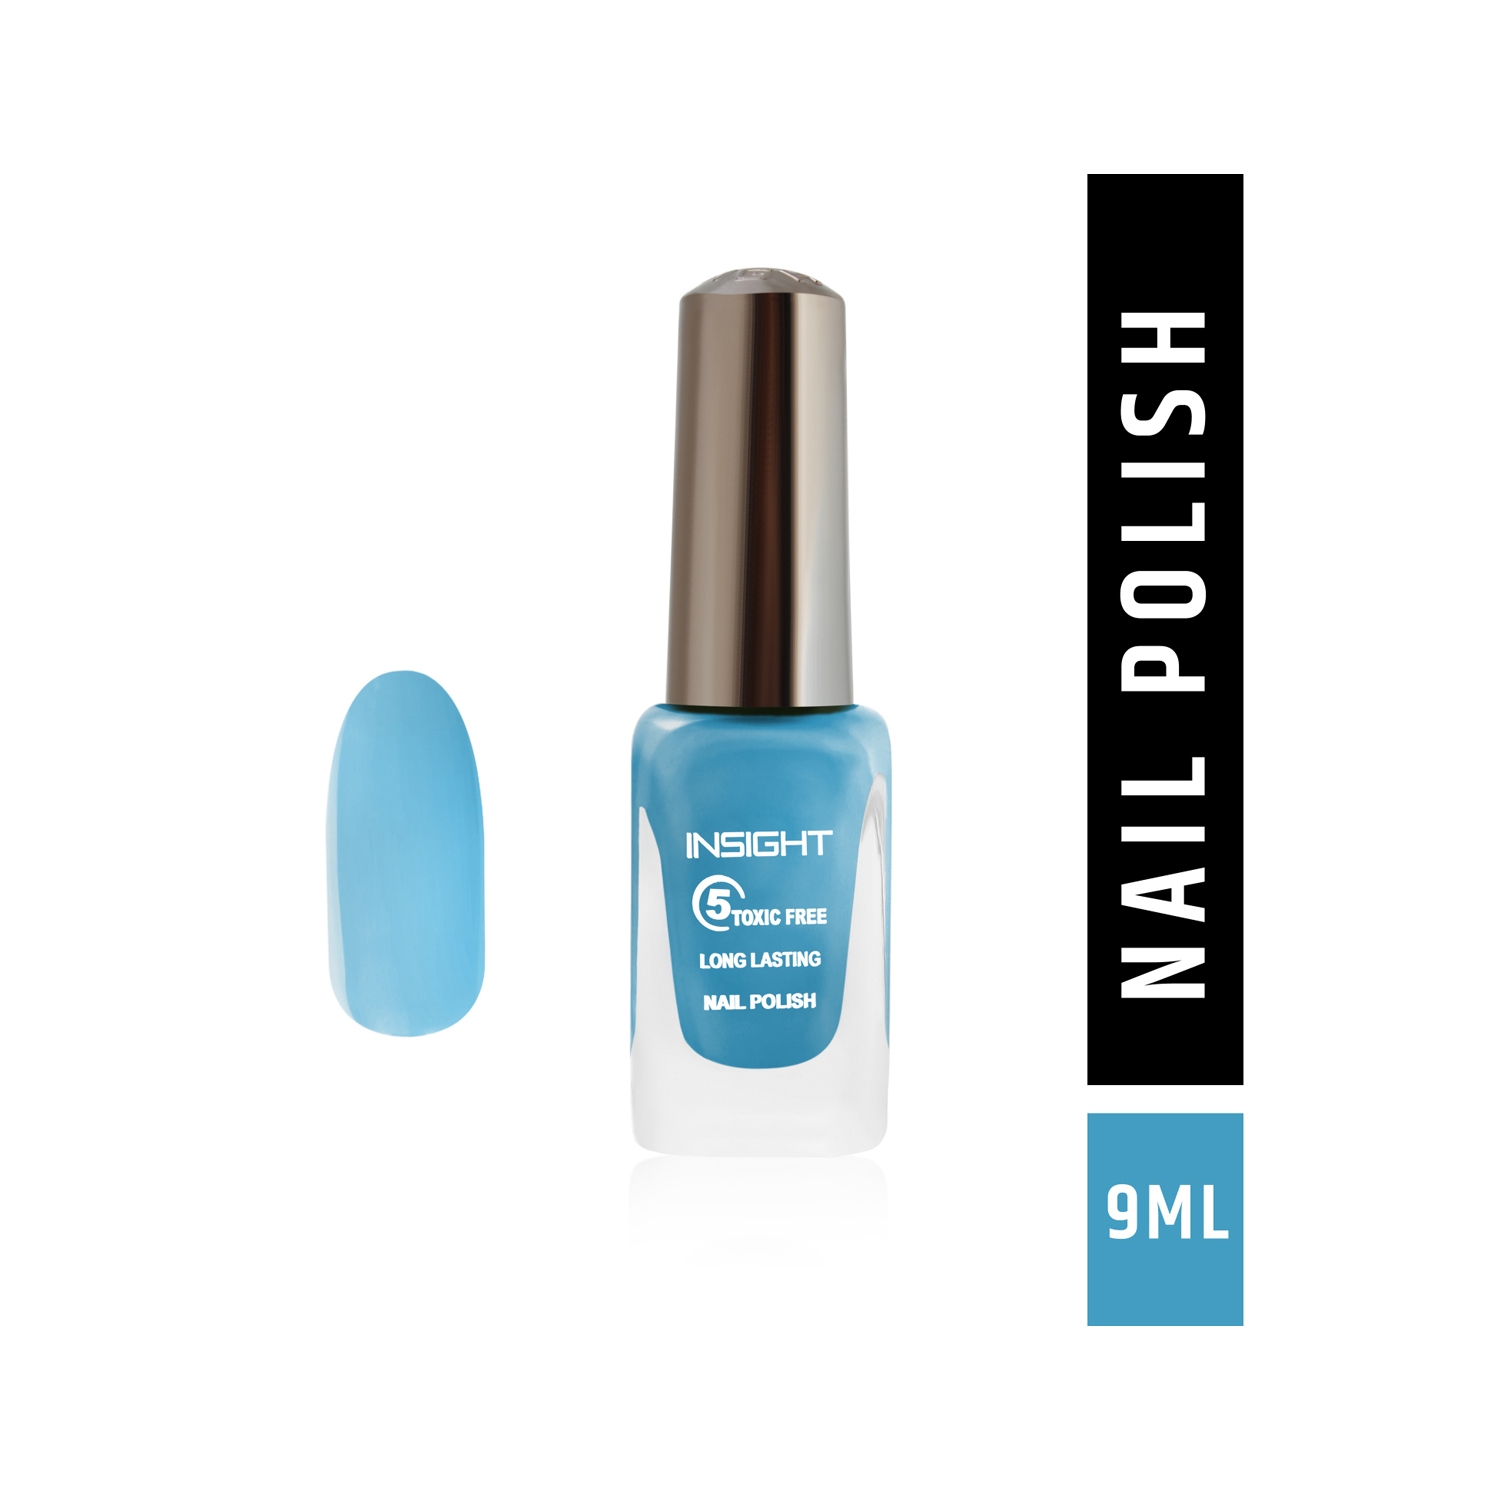 Insight Cosmetics 5 Toxic Free Long Lasting Nail Polish - 119 Shade (9ml)